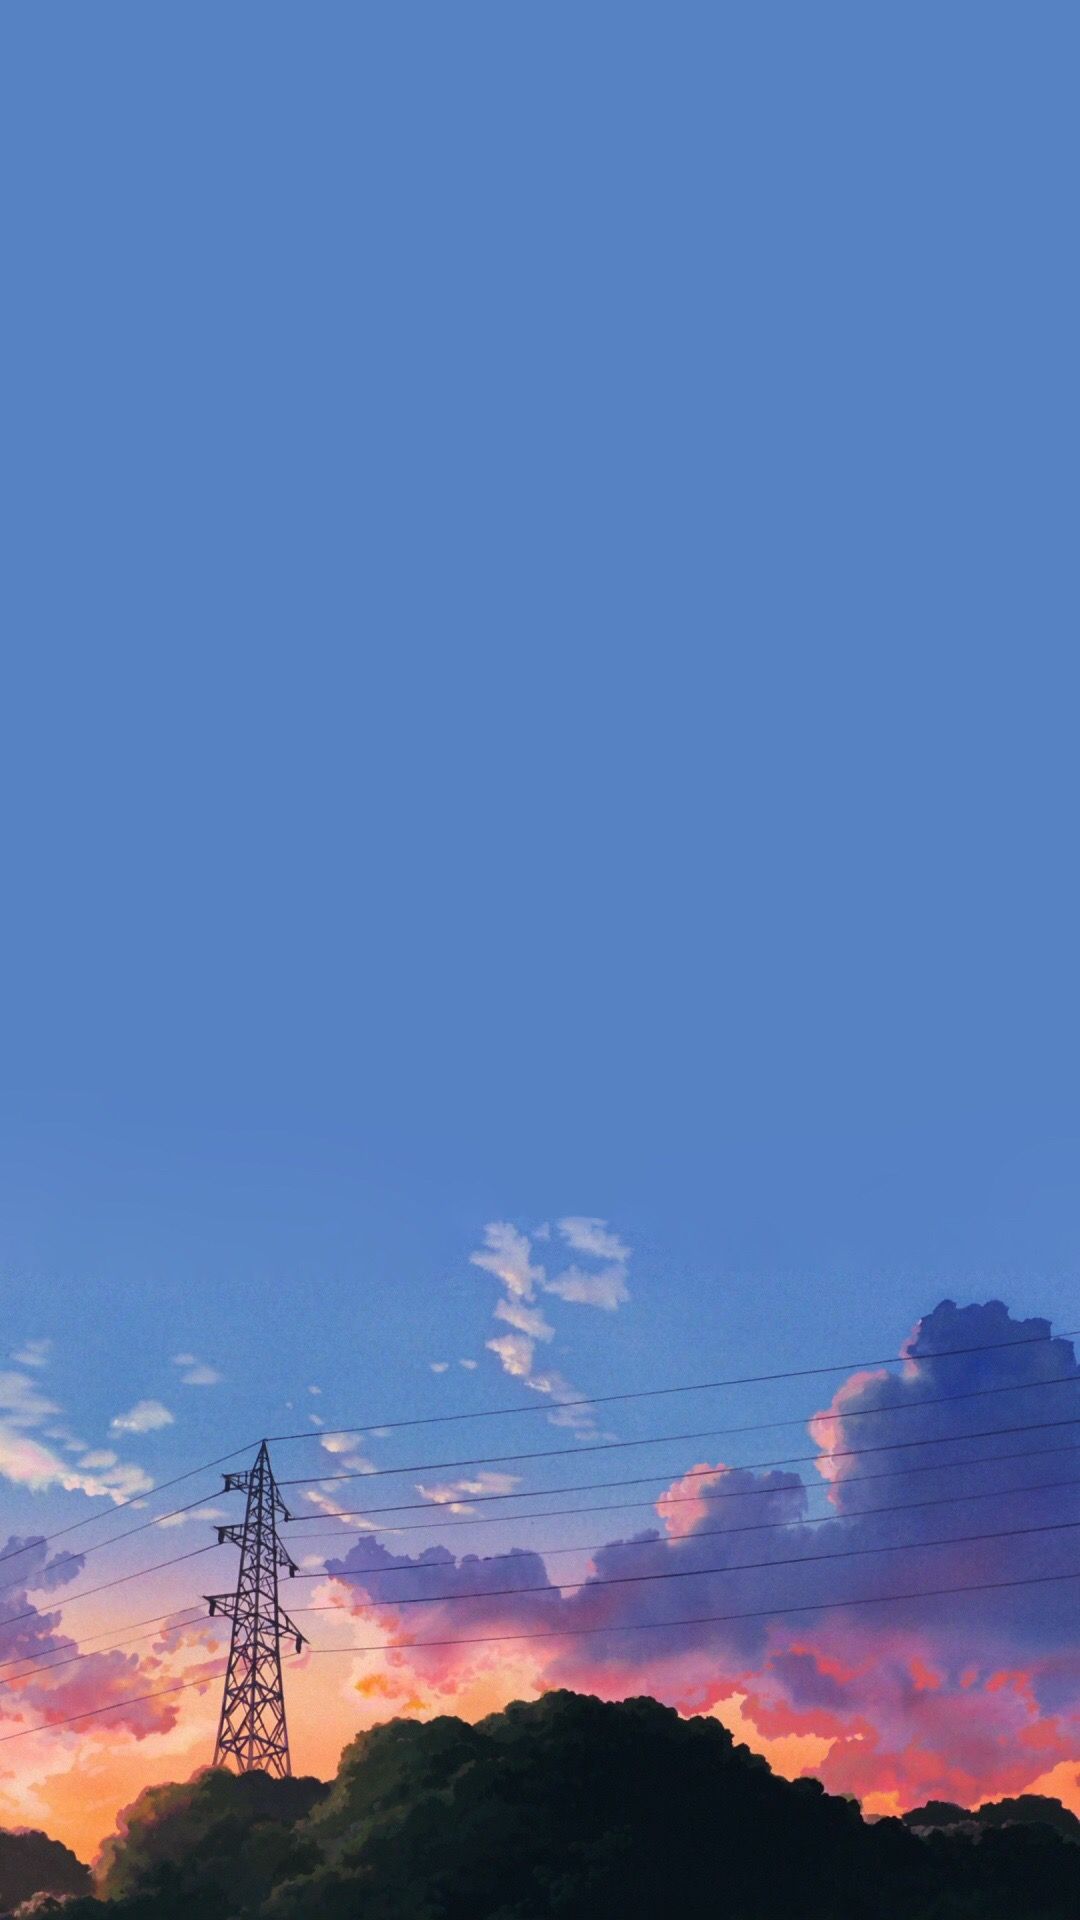 iPhone wallpaper. Scenery wallpaper, Anime scenery wallpaper, Sky aesthetic